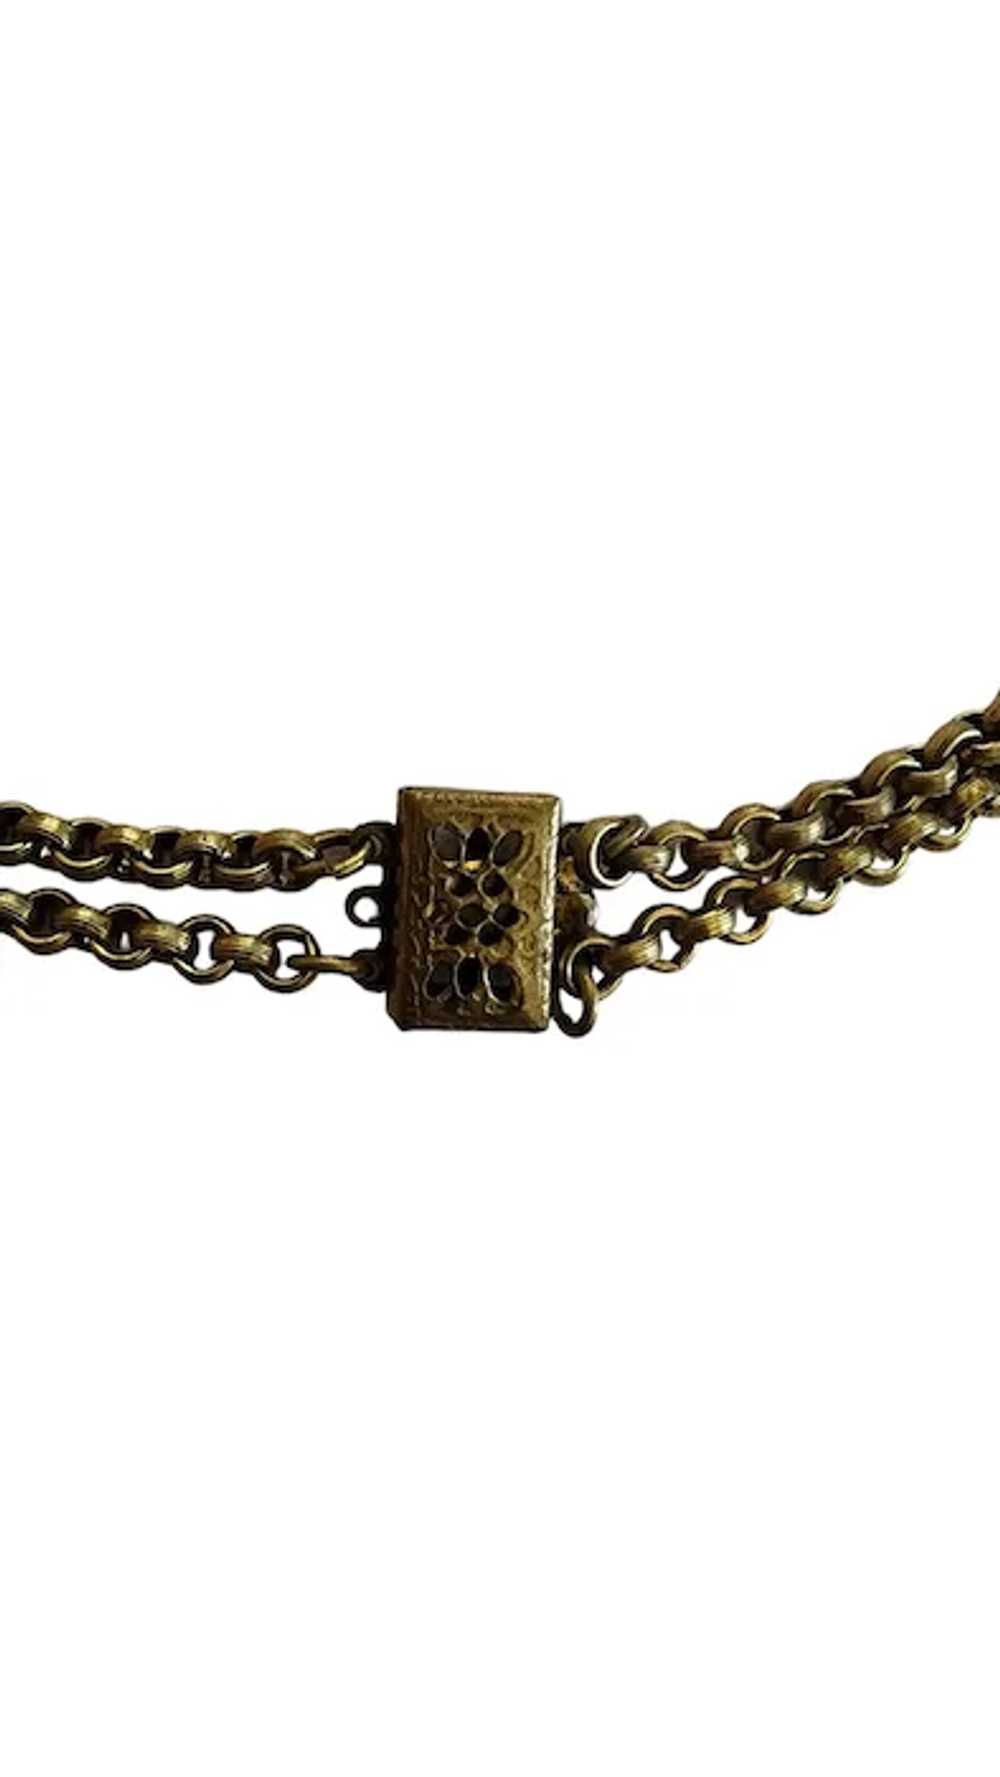 Antique Brass Festoon Bib Necklace [A2535] - image 5